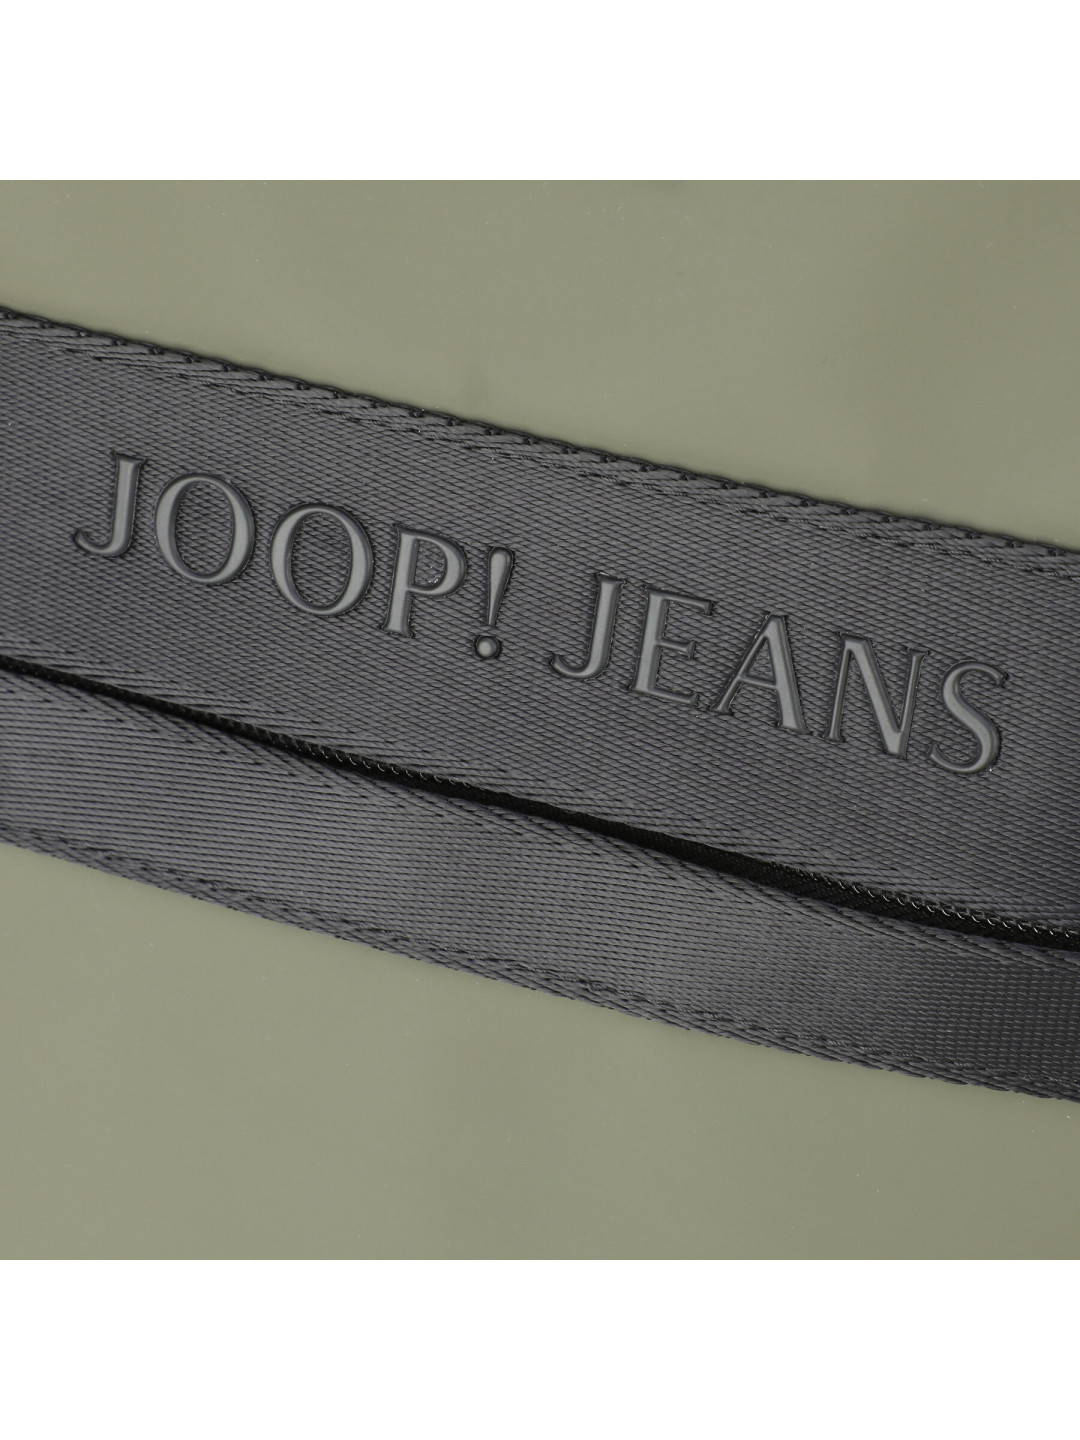 Batoh JOOP Jeans